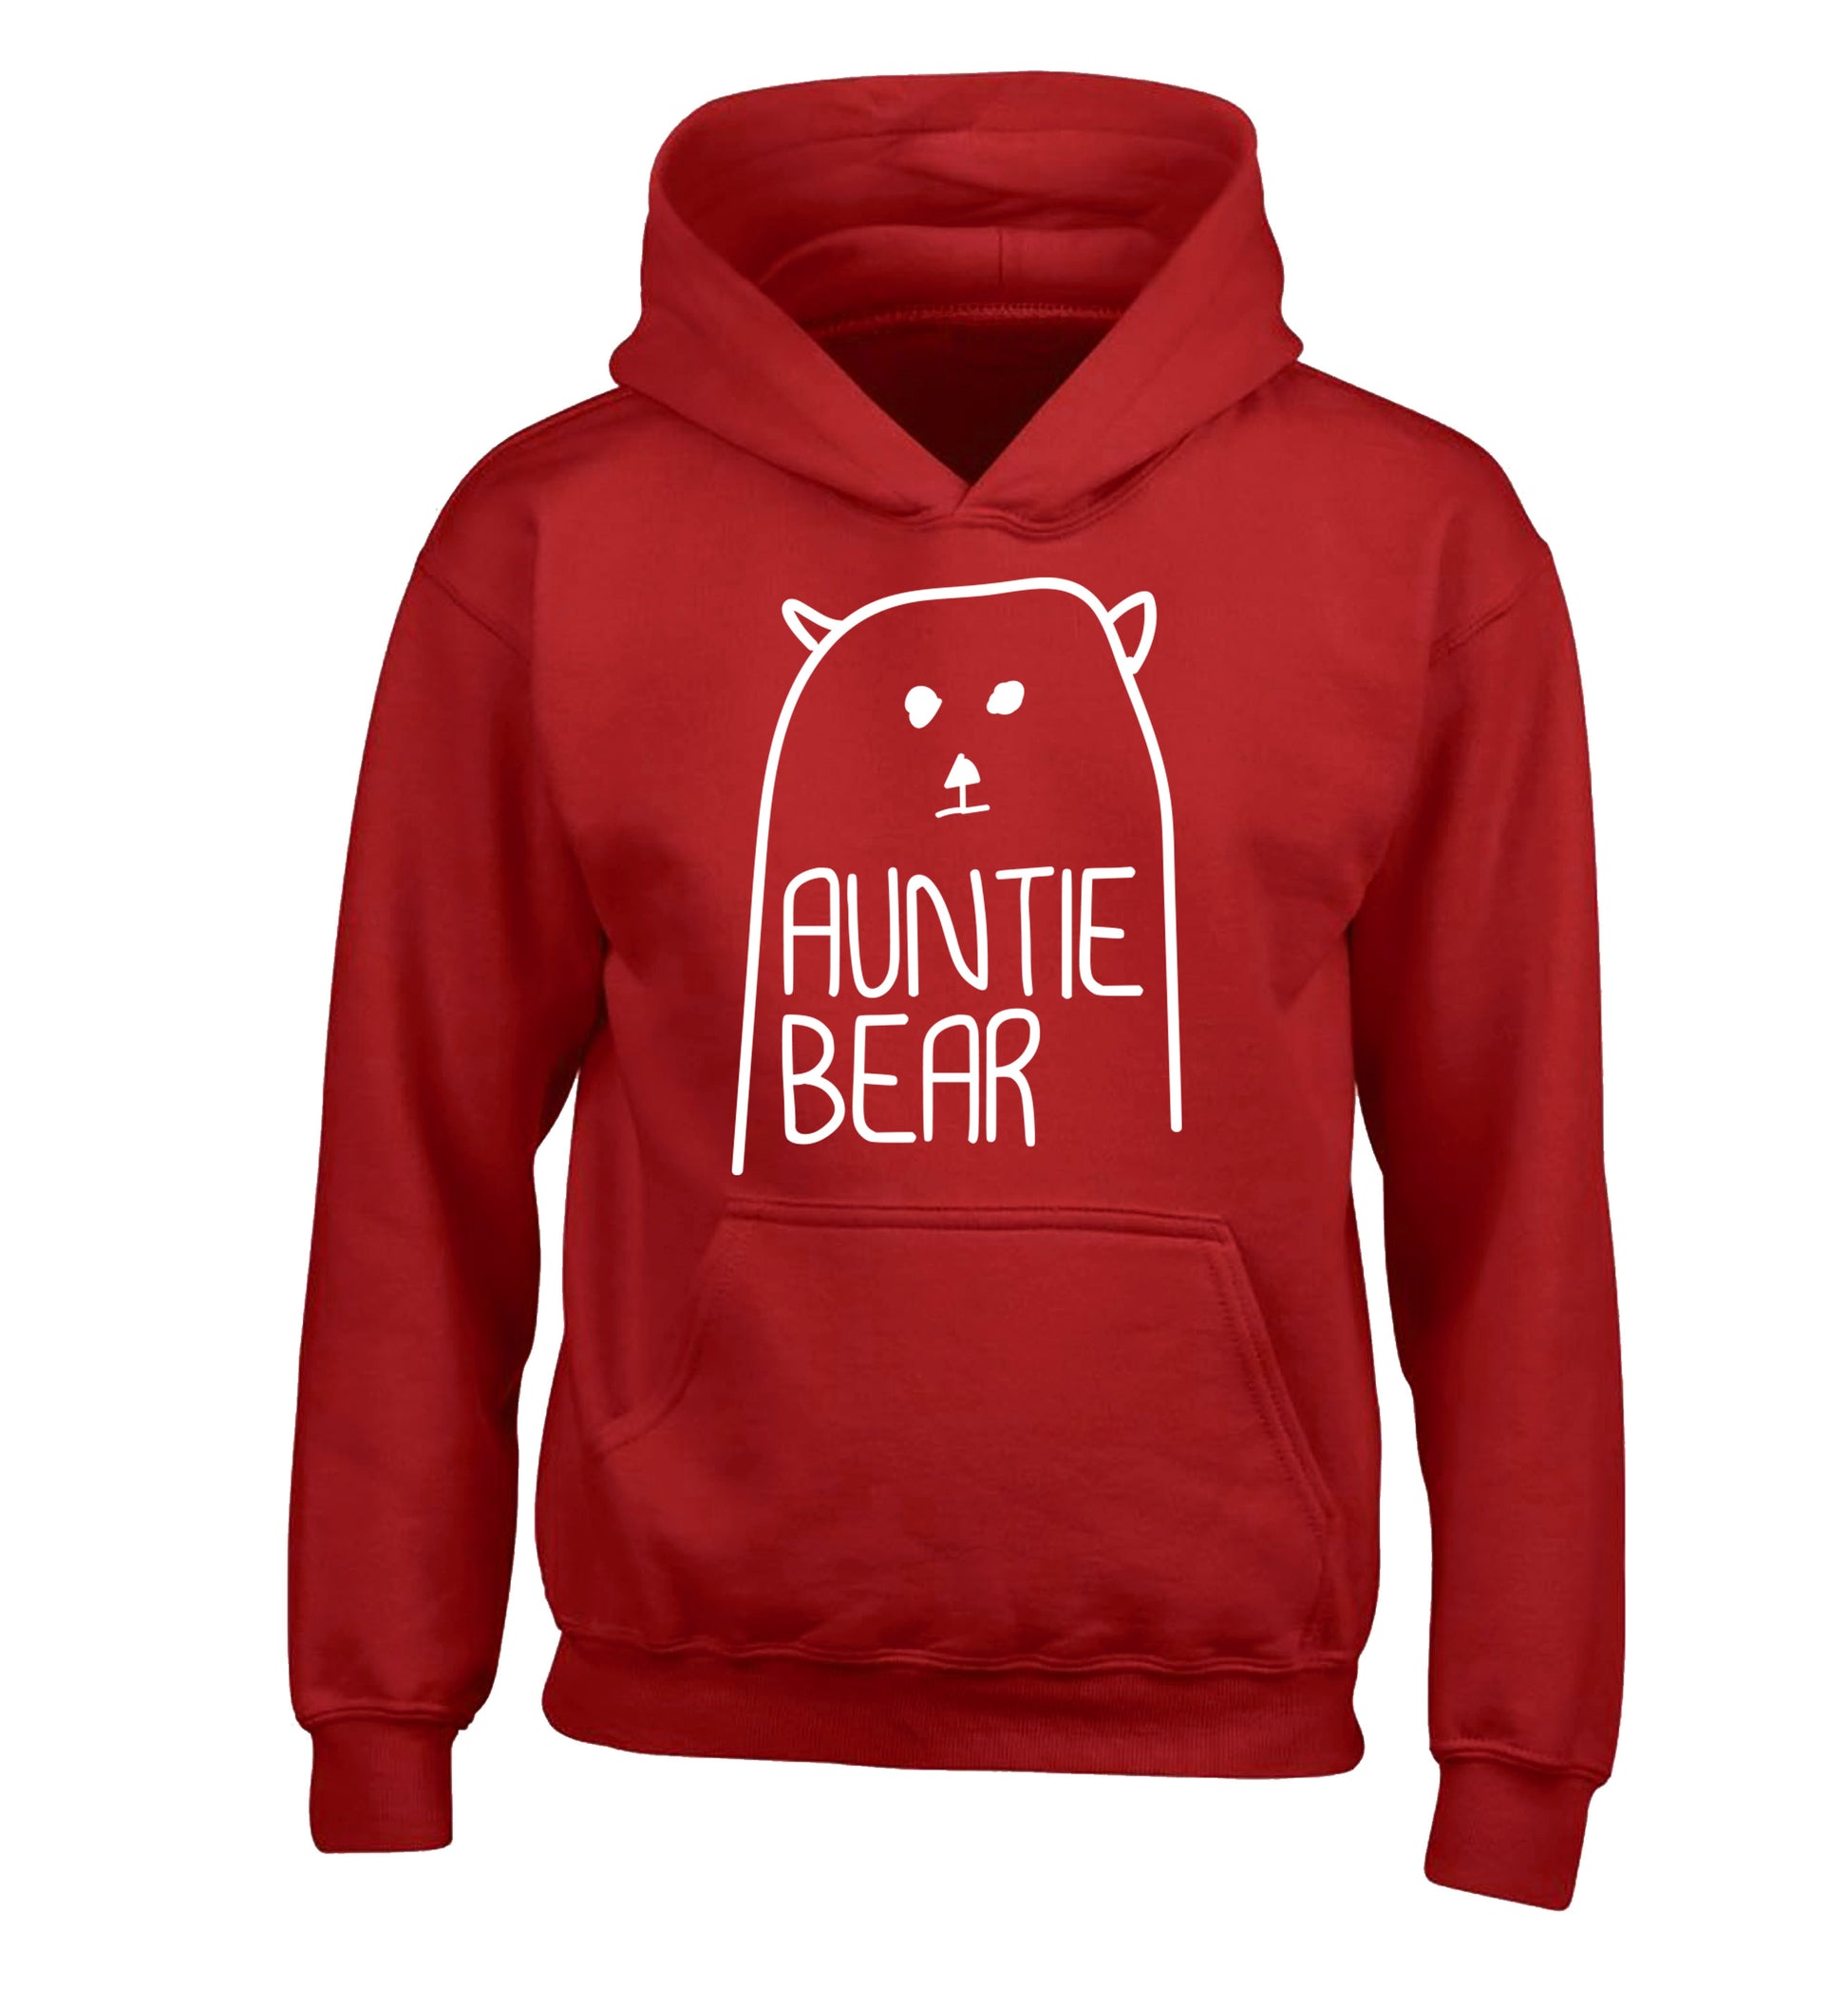 Auntie bear children's red hoodie 12-13 Years